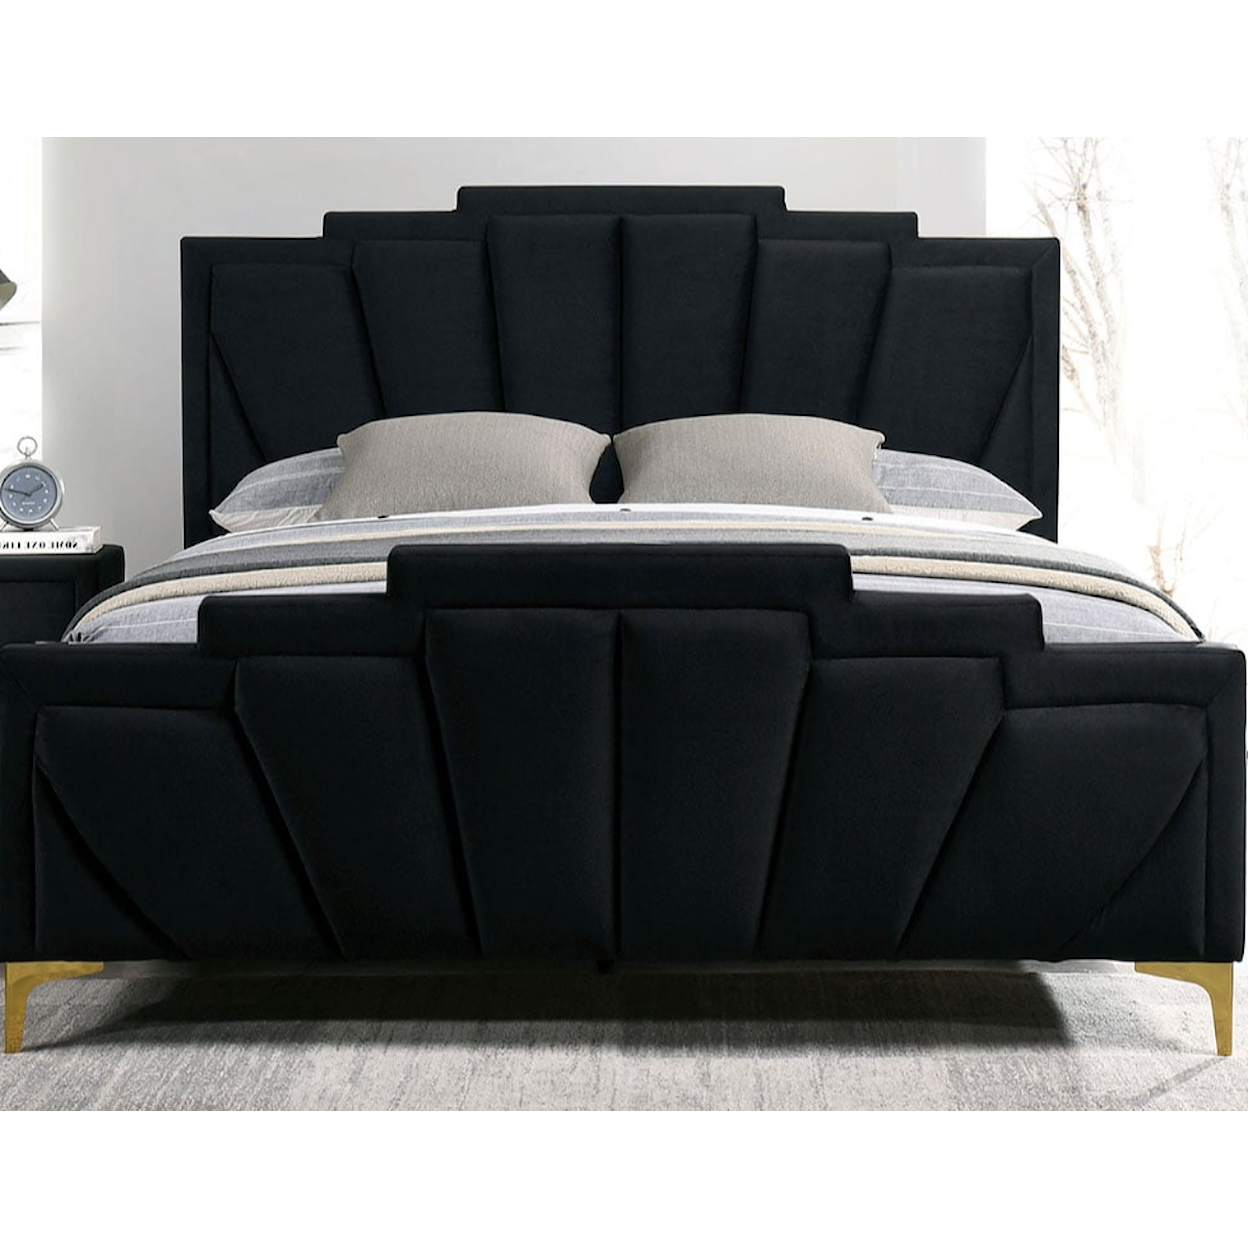 Furniture of America FLORIZEL Upholstered Queen Panel Bed - Black